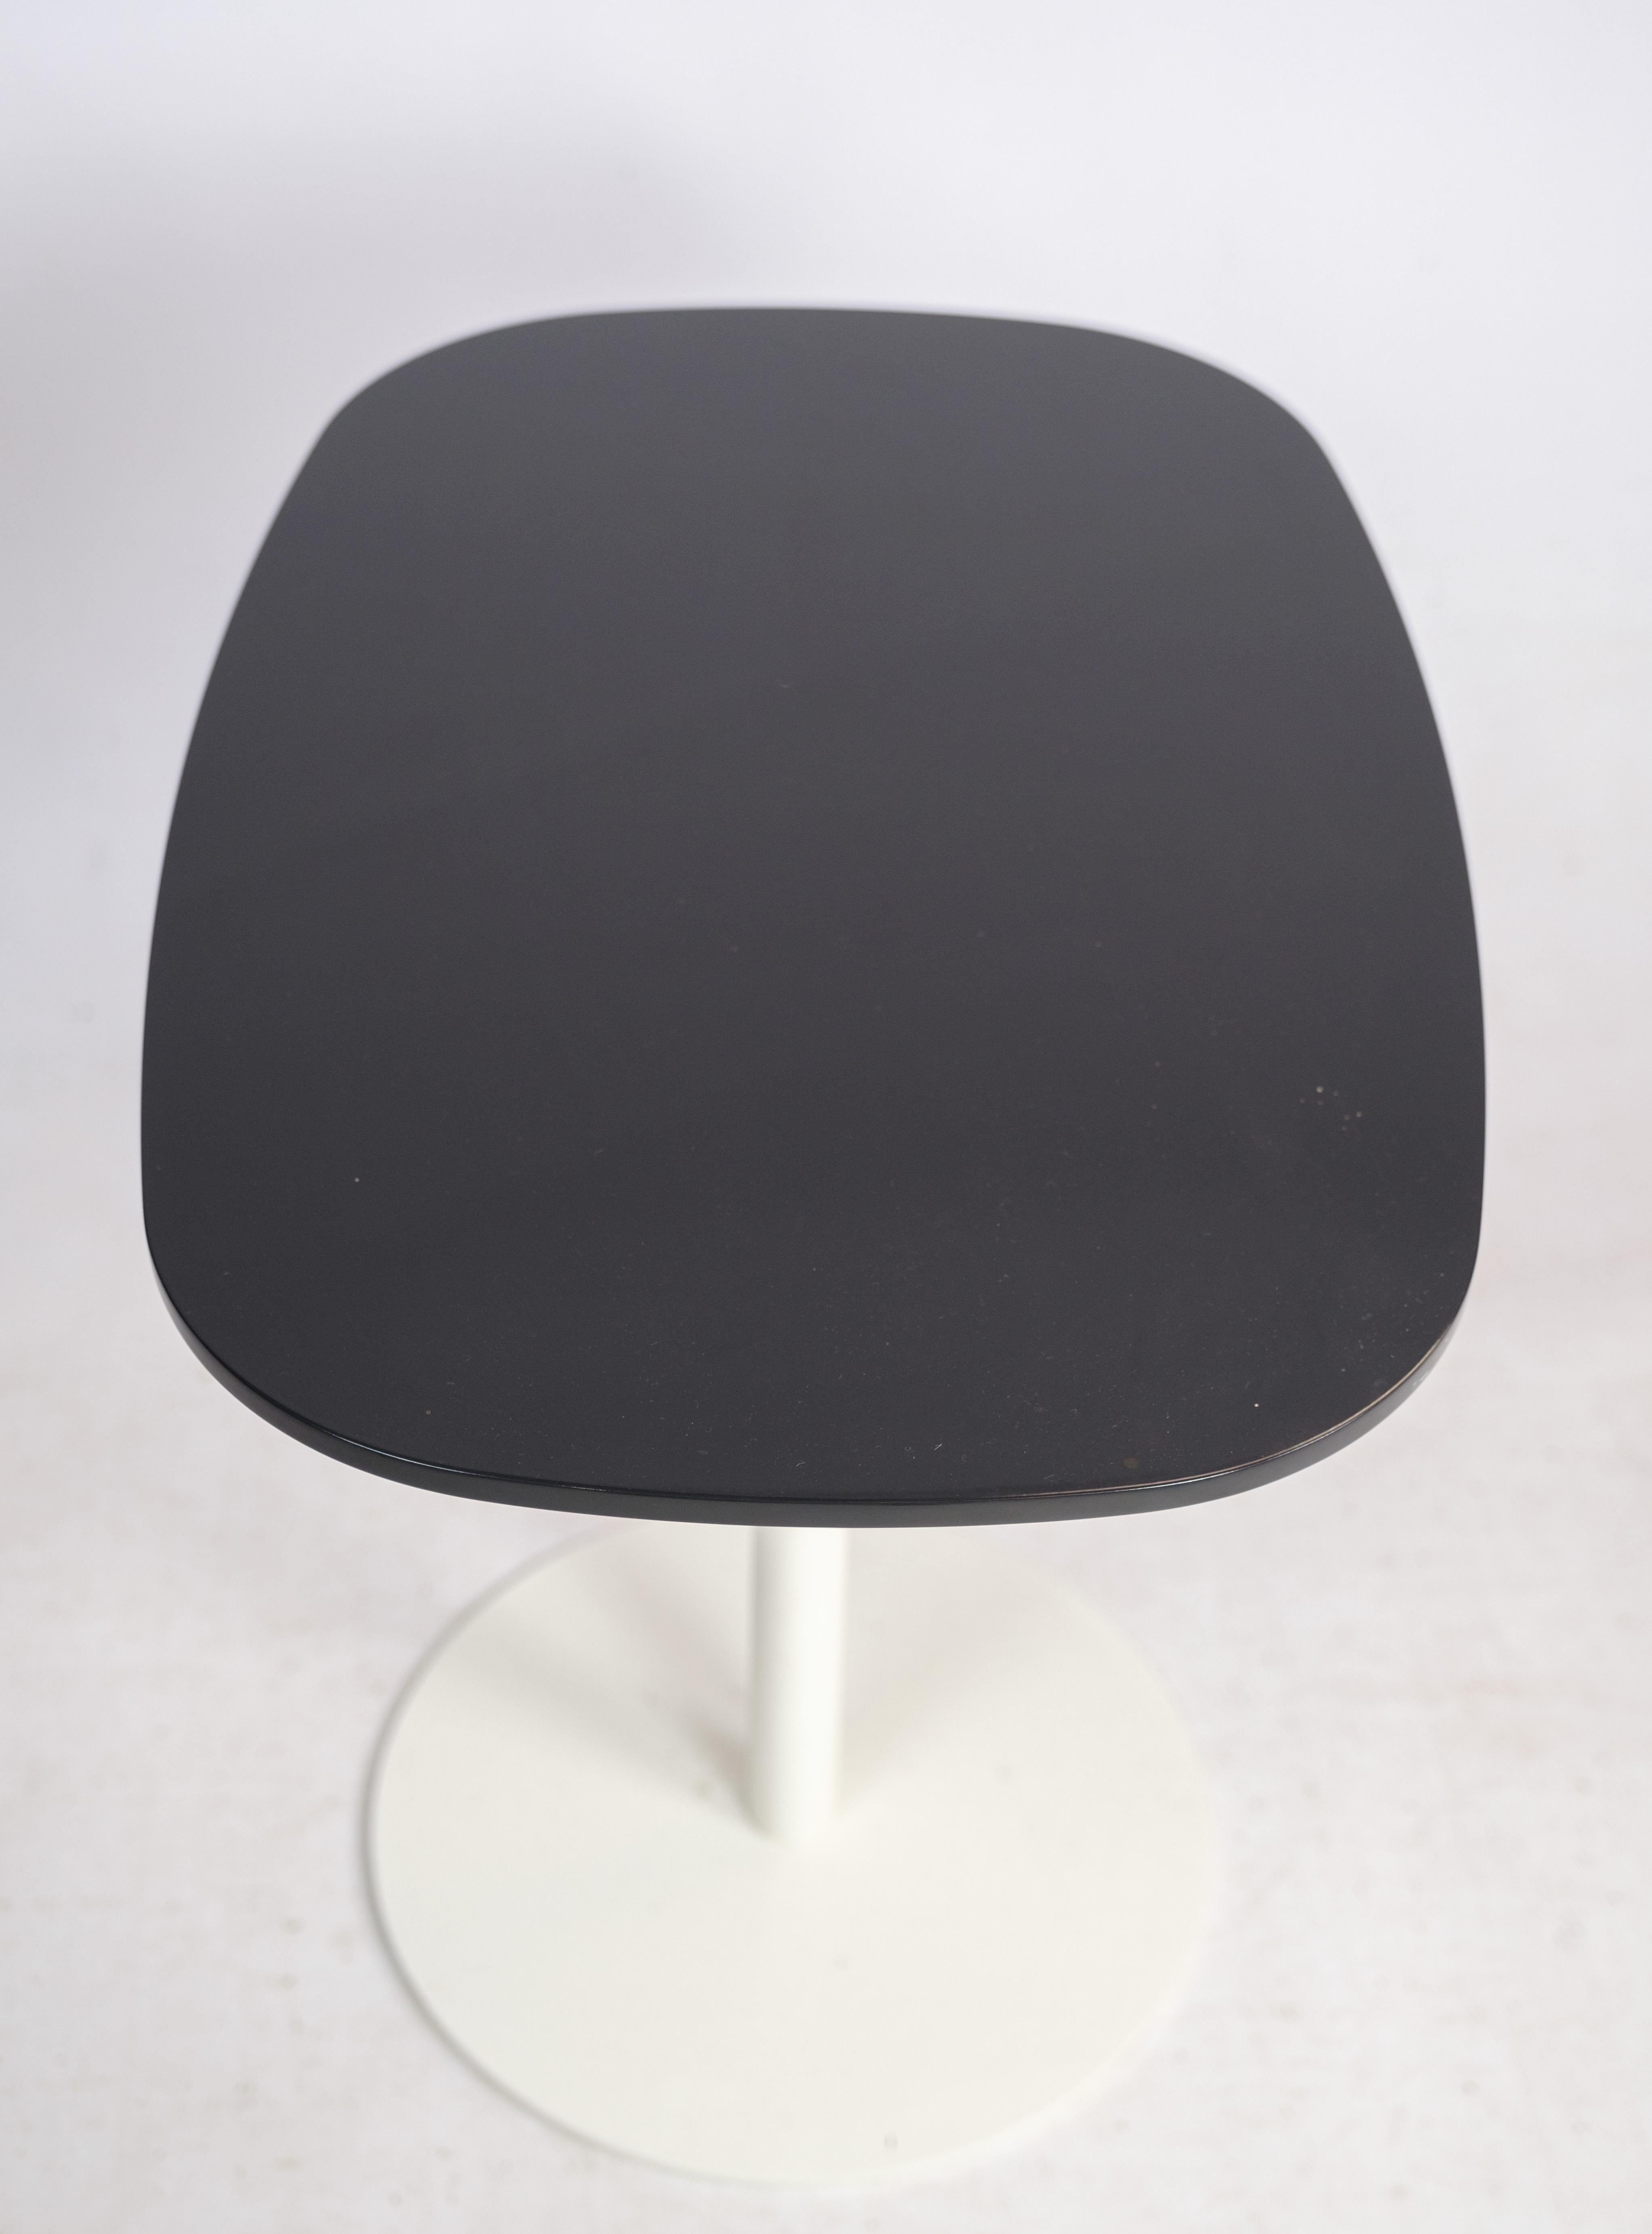 Coffee Table, Piero Lissoni, Black High-Gloss Colour, Fritz Hansen, 2006 1